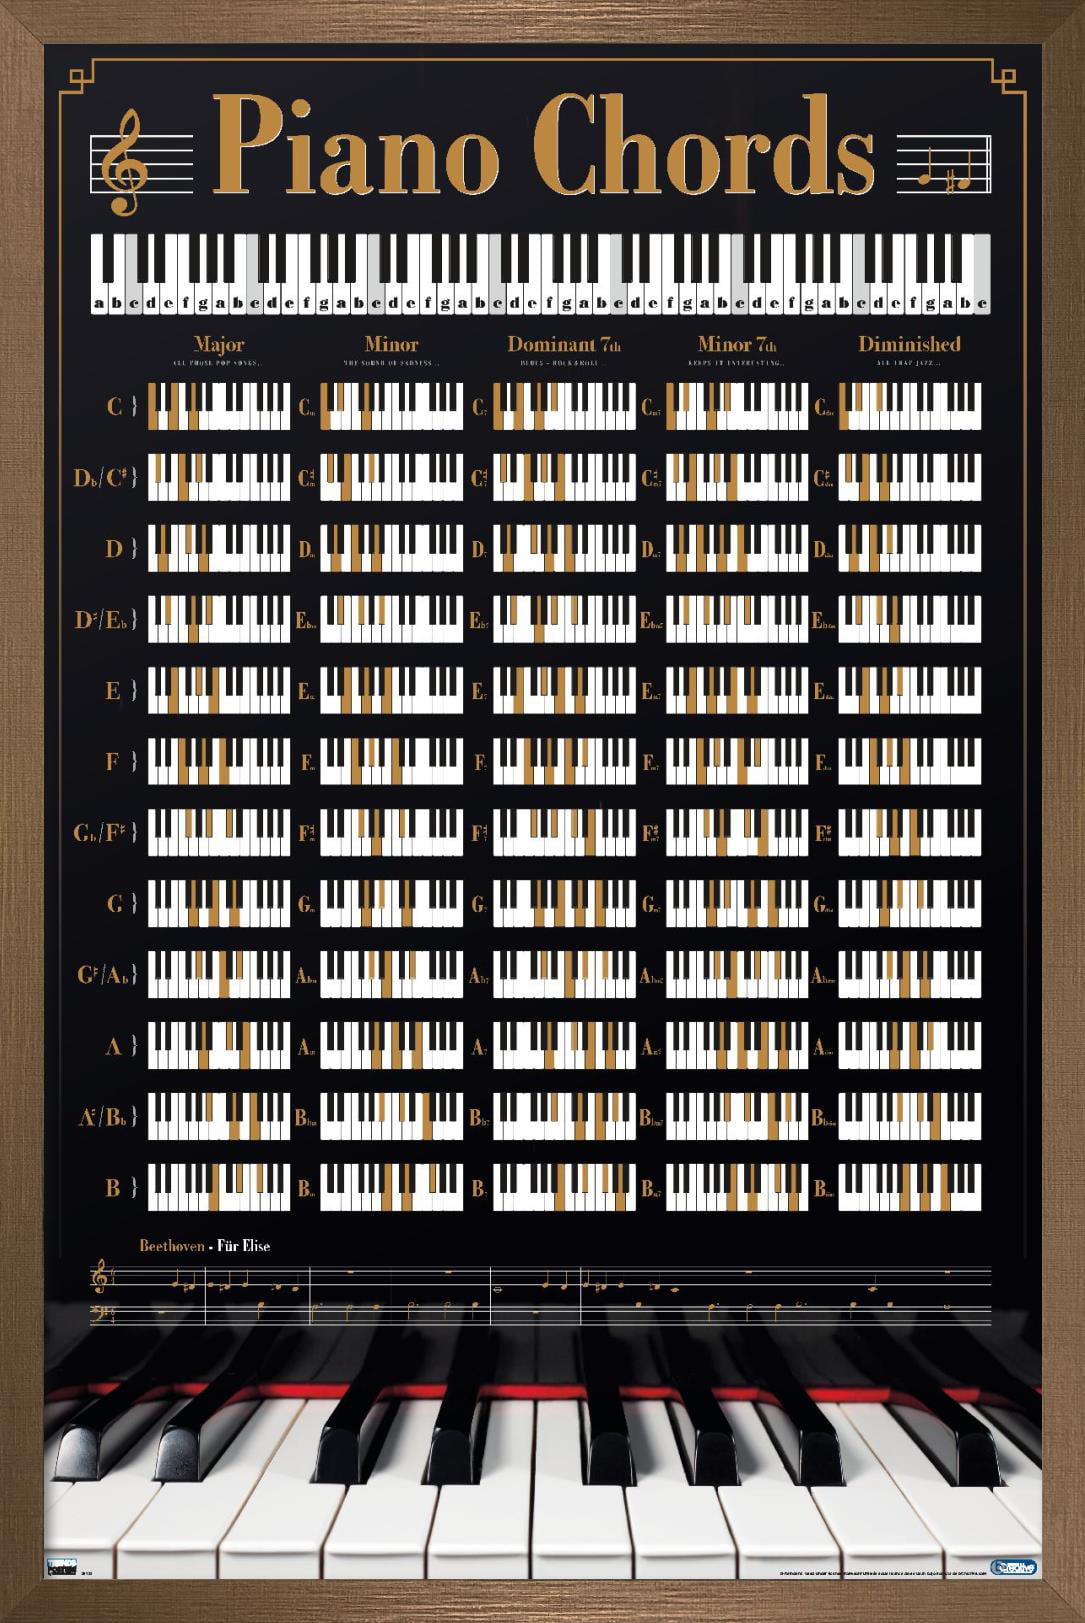 Reinders - Piano Keys Wall Poster, 14.725\